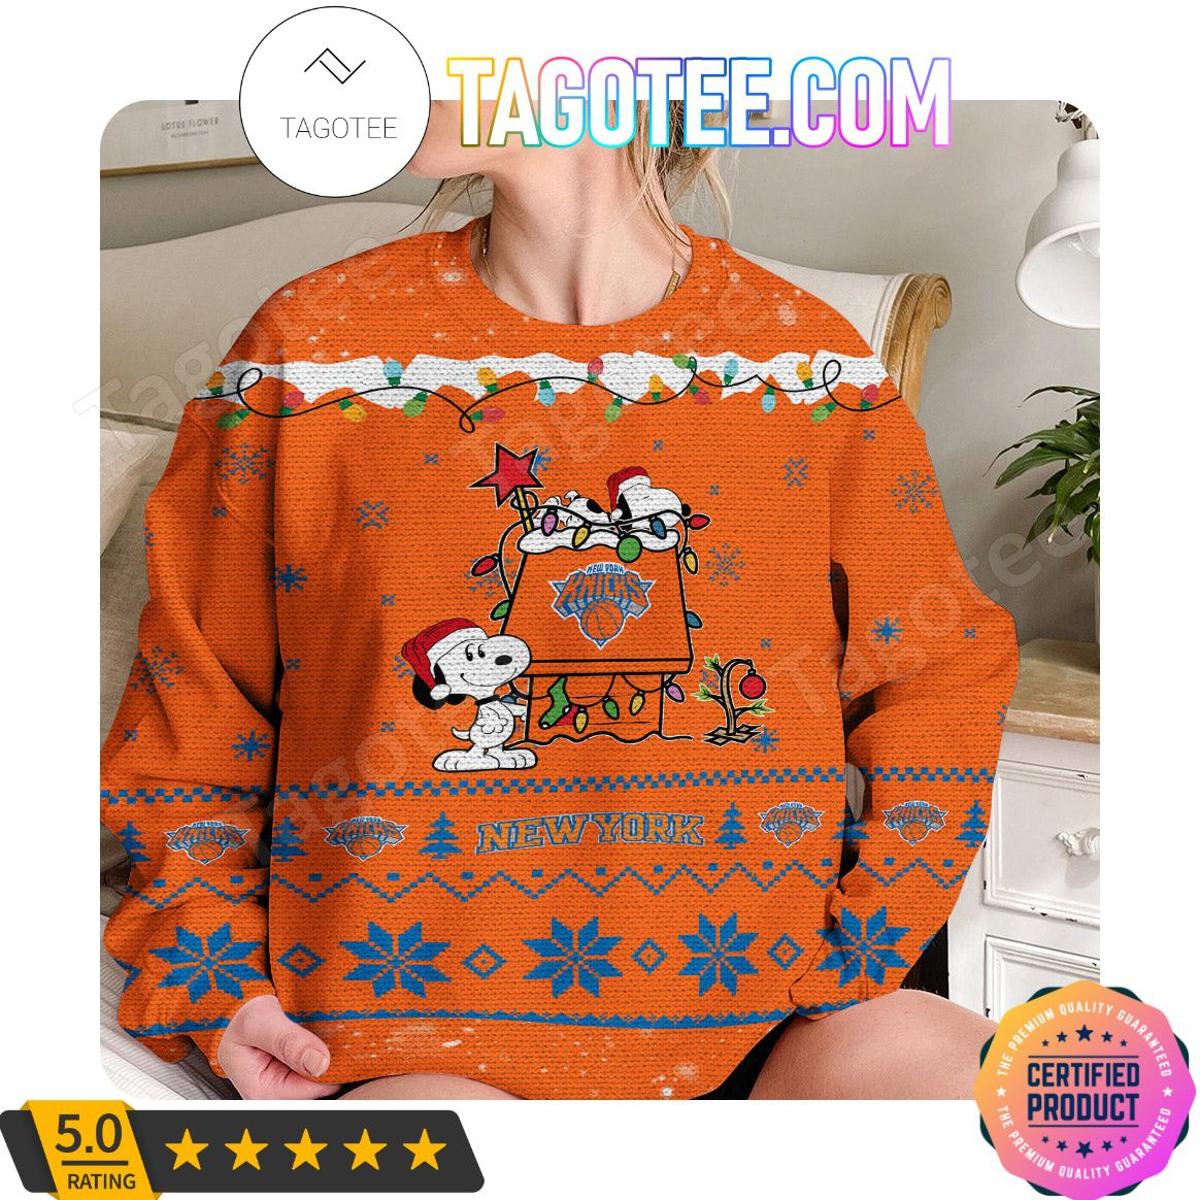 New York Knicks Orange Snoopy Lie On Dog House Ugly Christmas Sweater Gift